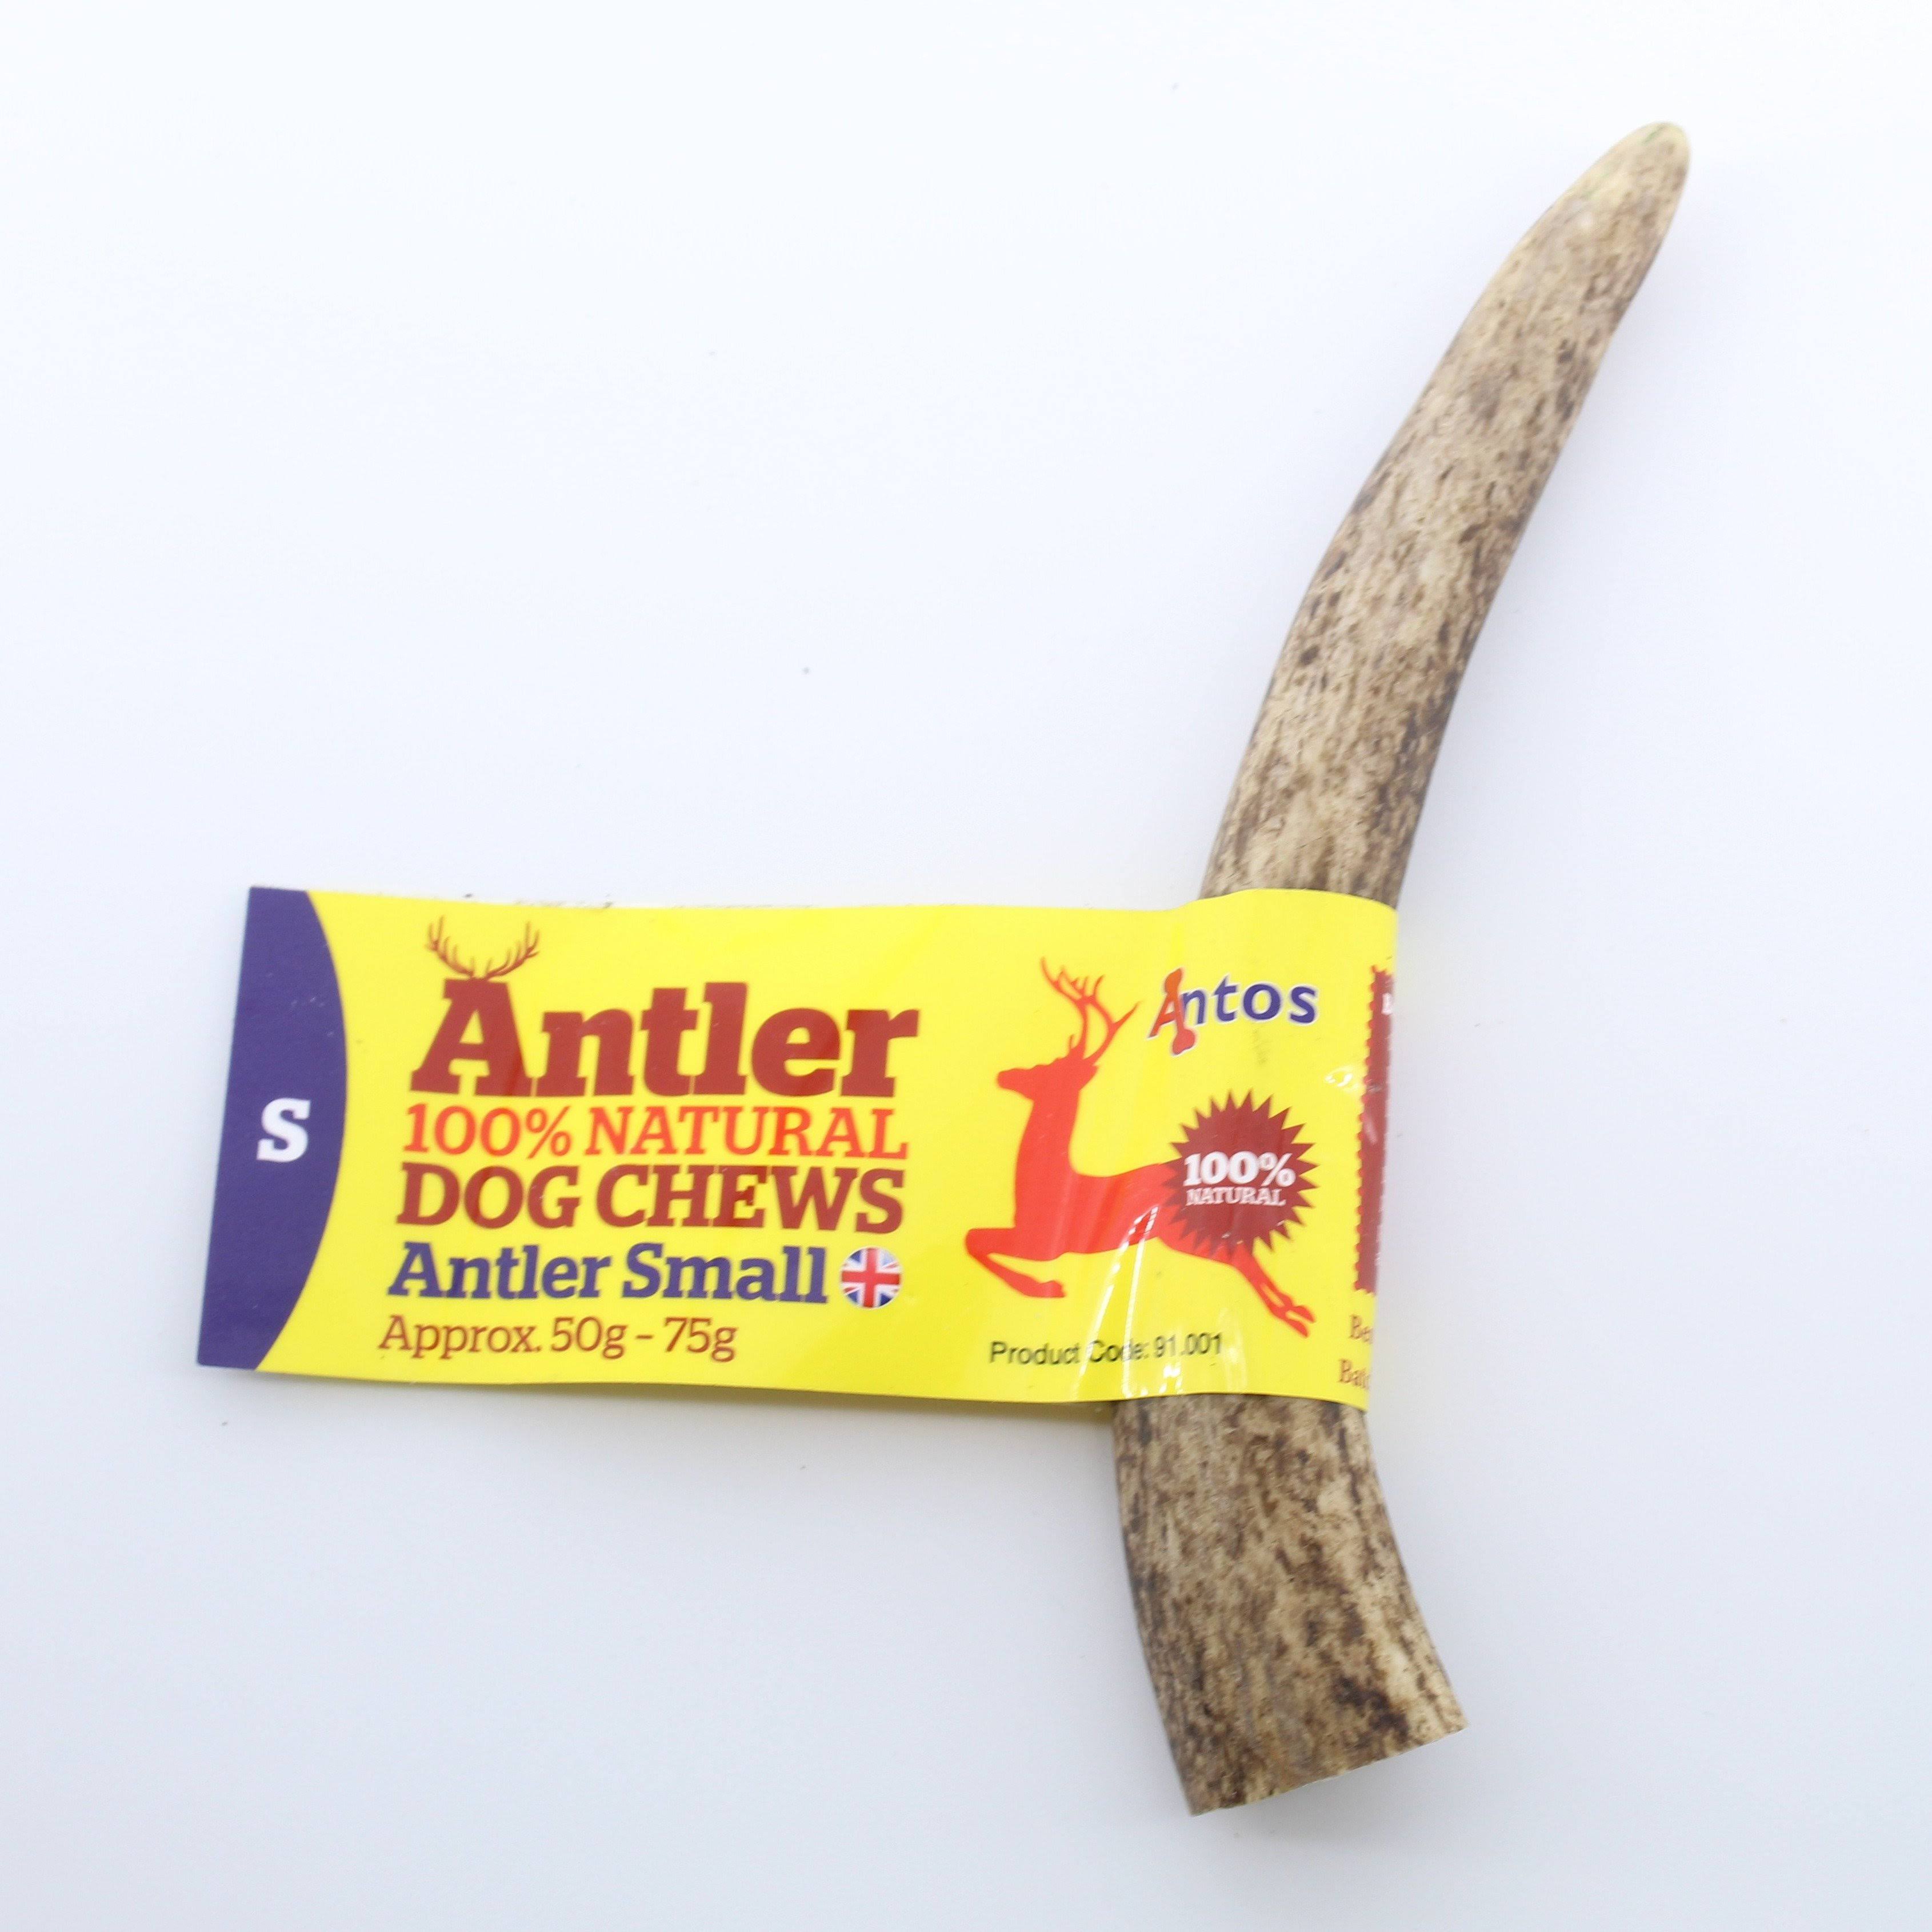 Antos Antler Dog Chews - Small